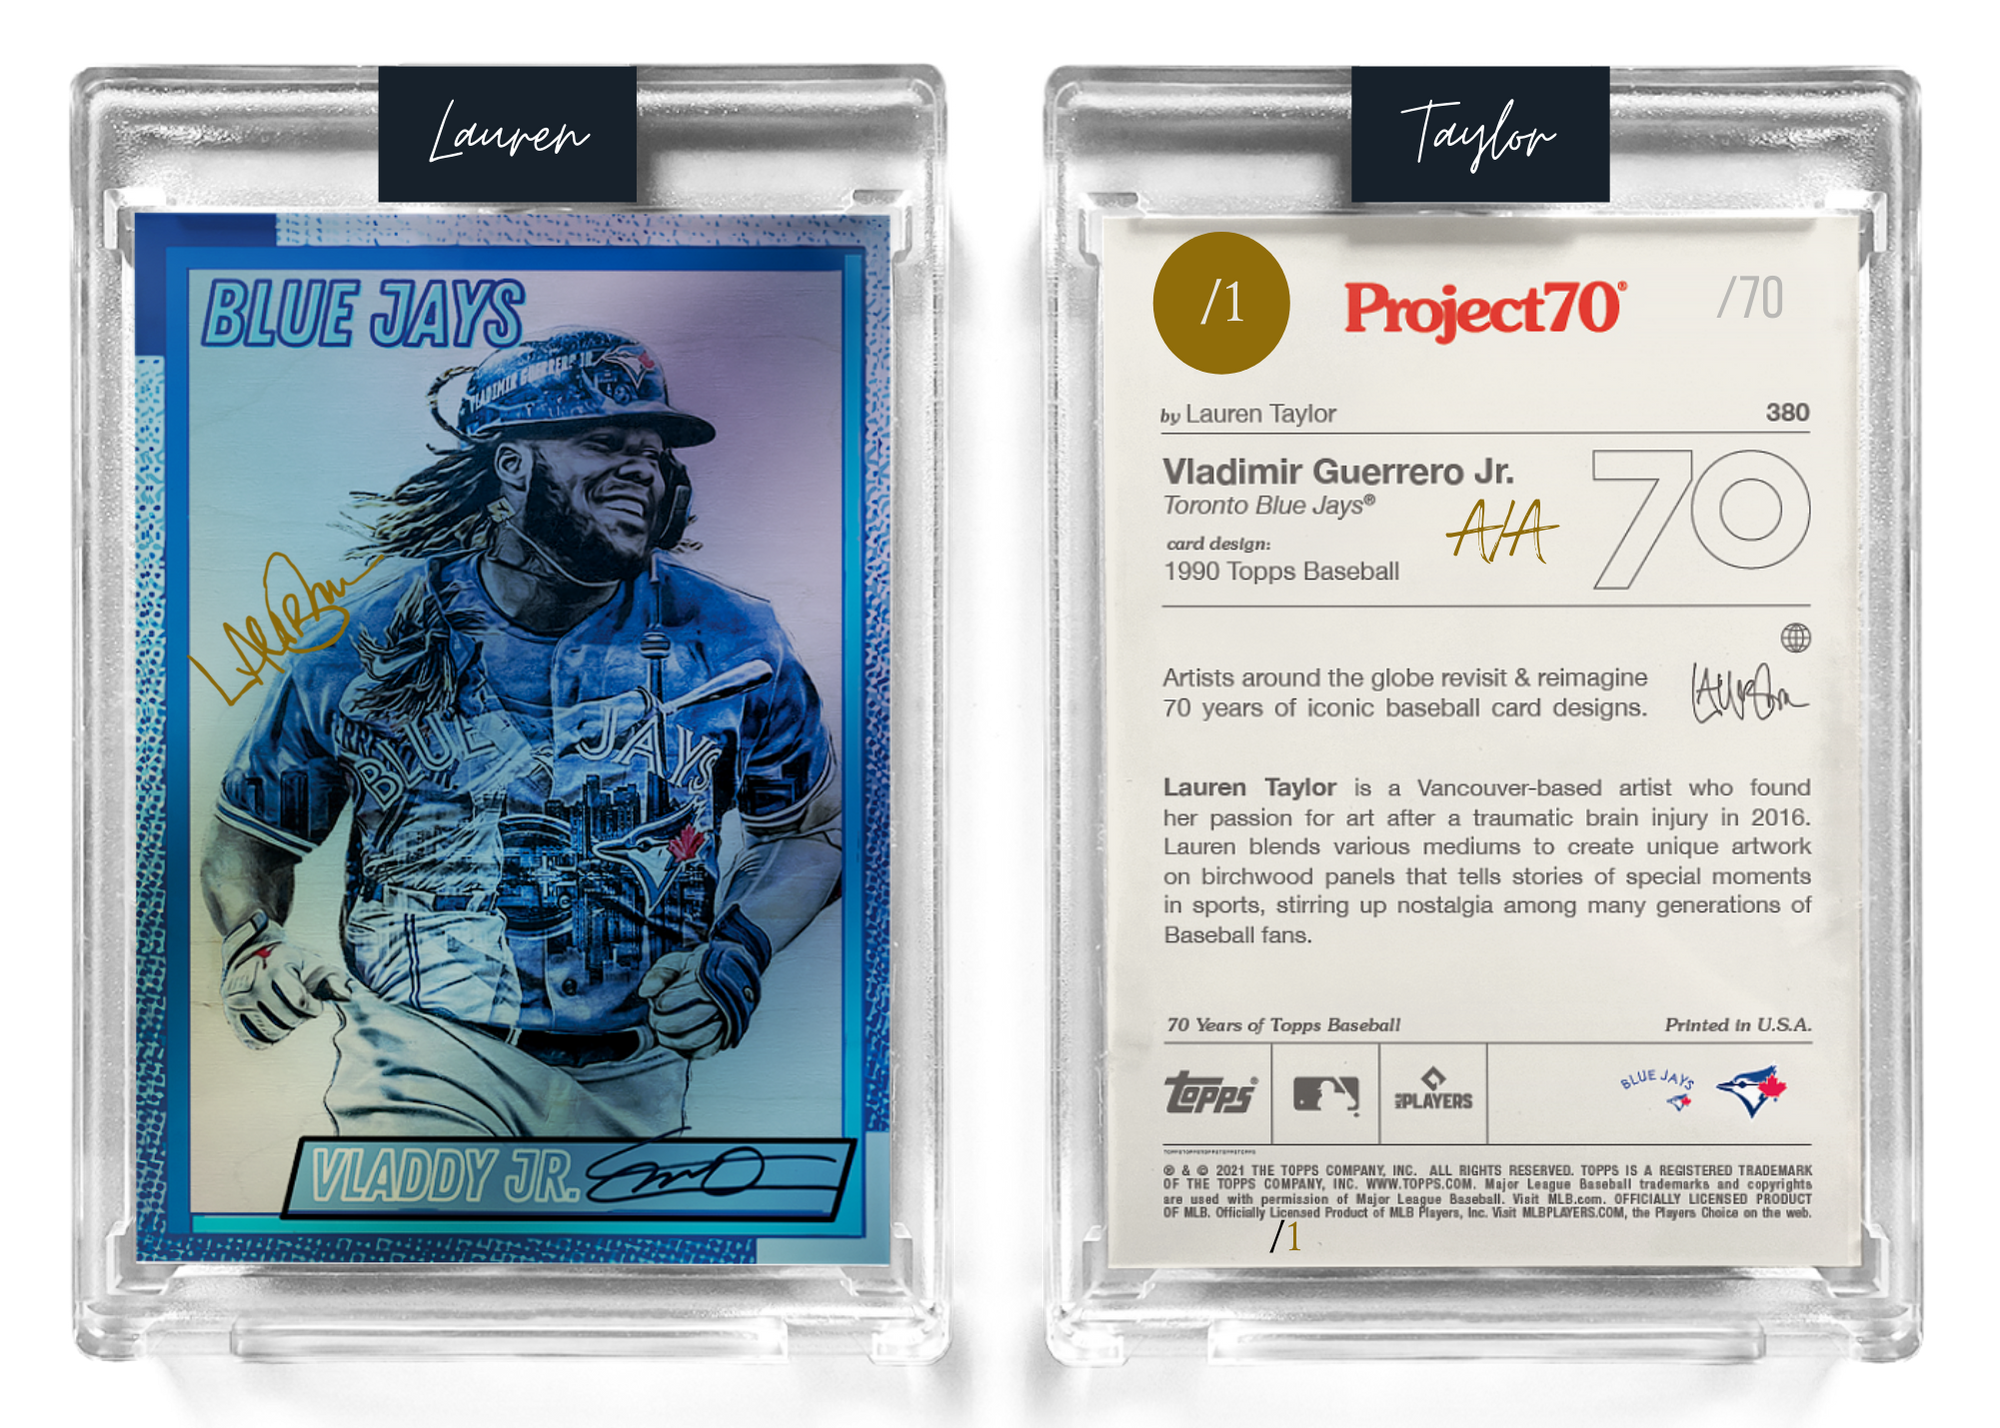 1/1 Gold Metallic Artist Signature - Foil Variant 130pt Card  - Topps Project 70 130pt card #380 by Lauren Taylor - Vladimir Guerrero Jr.